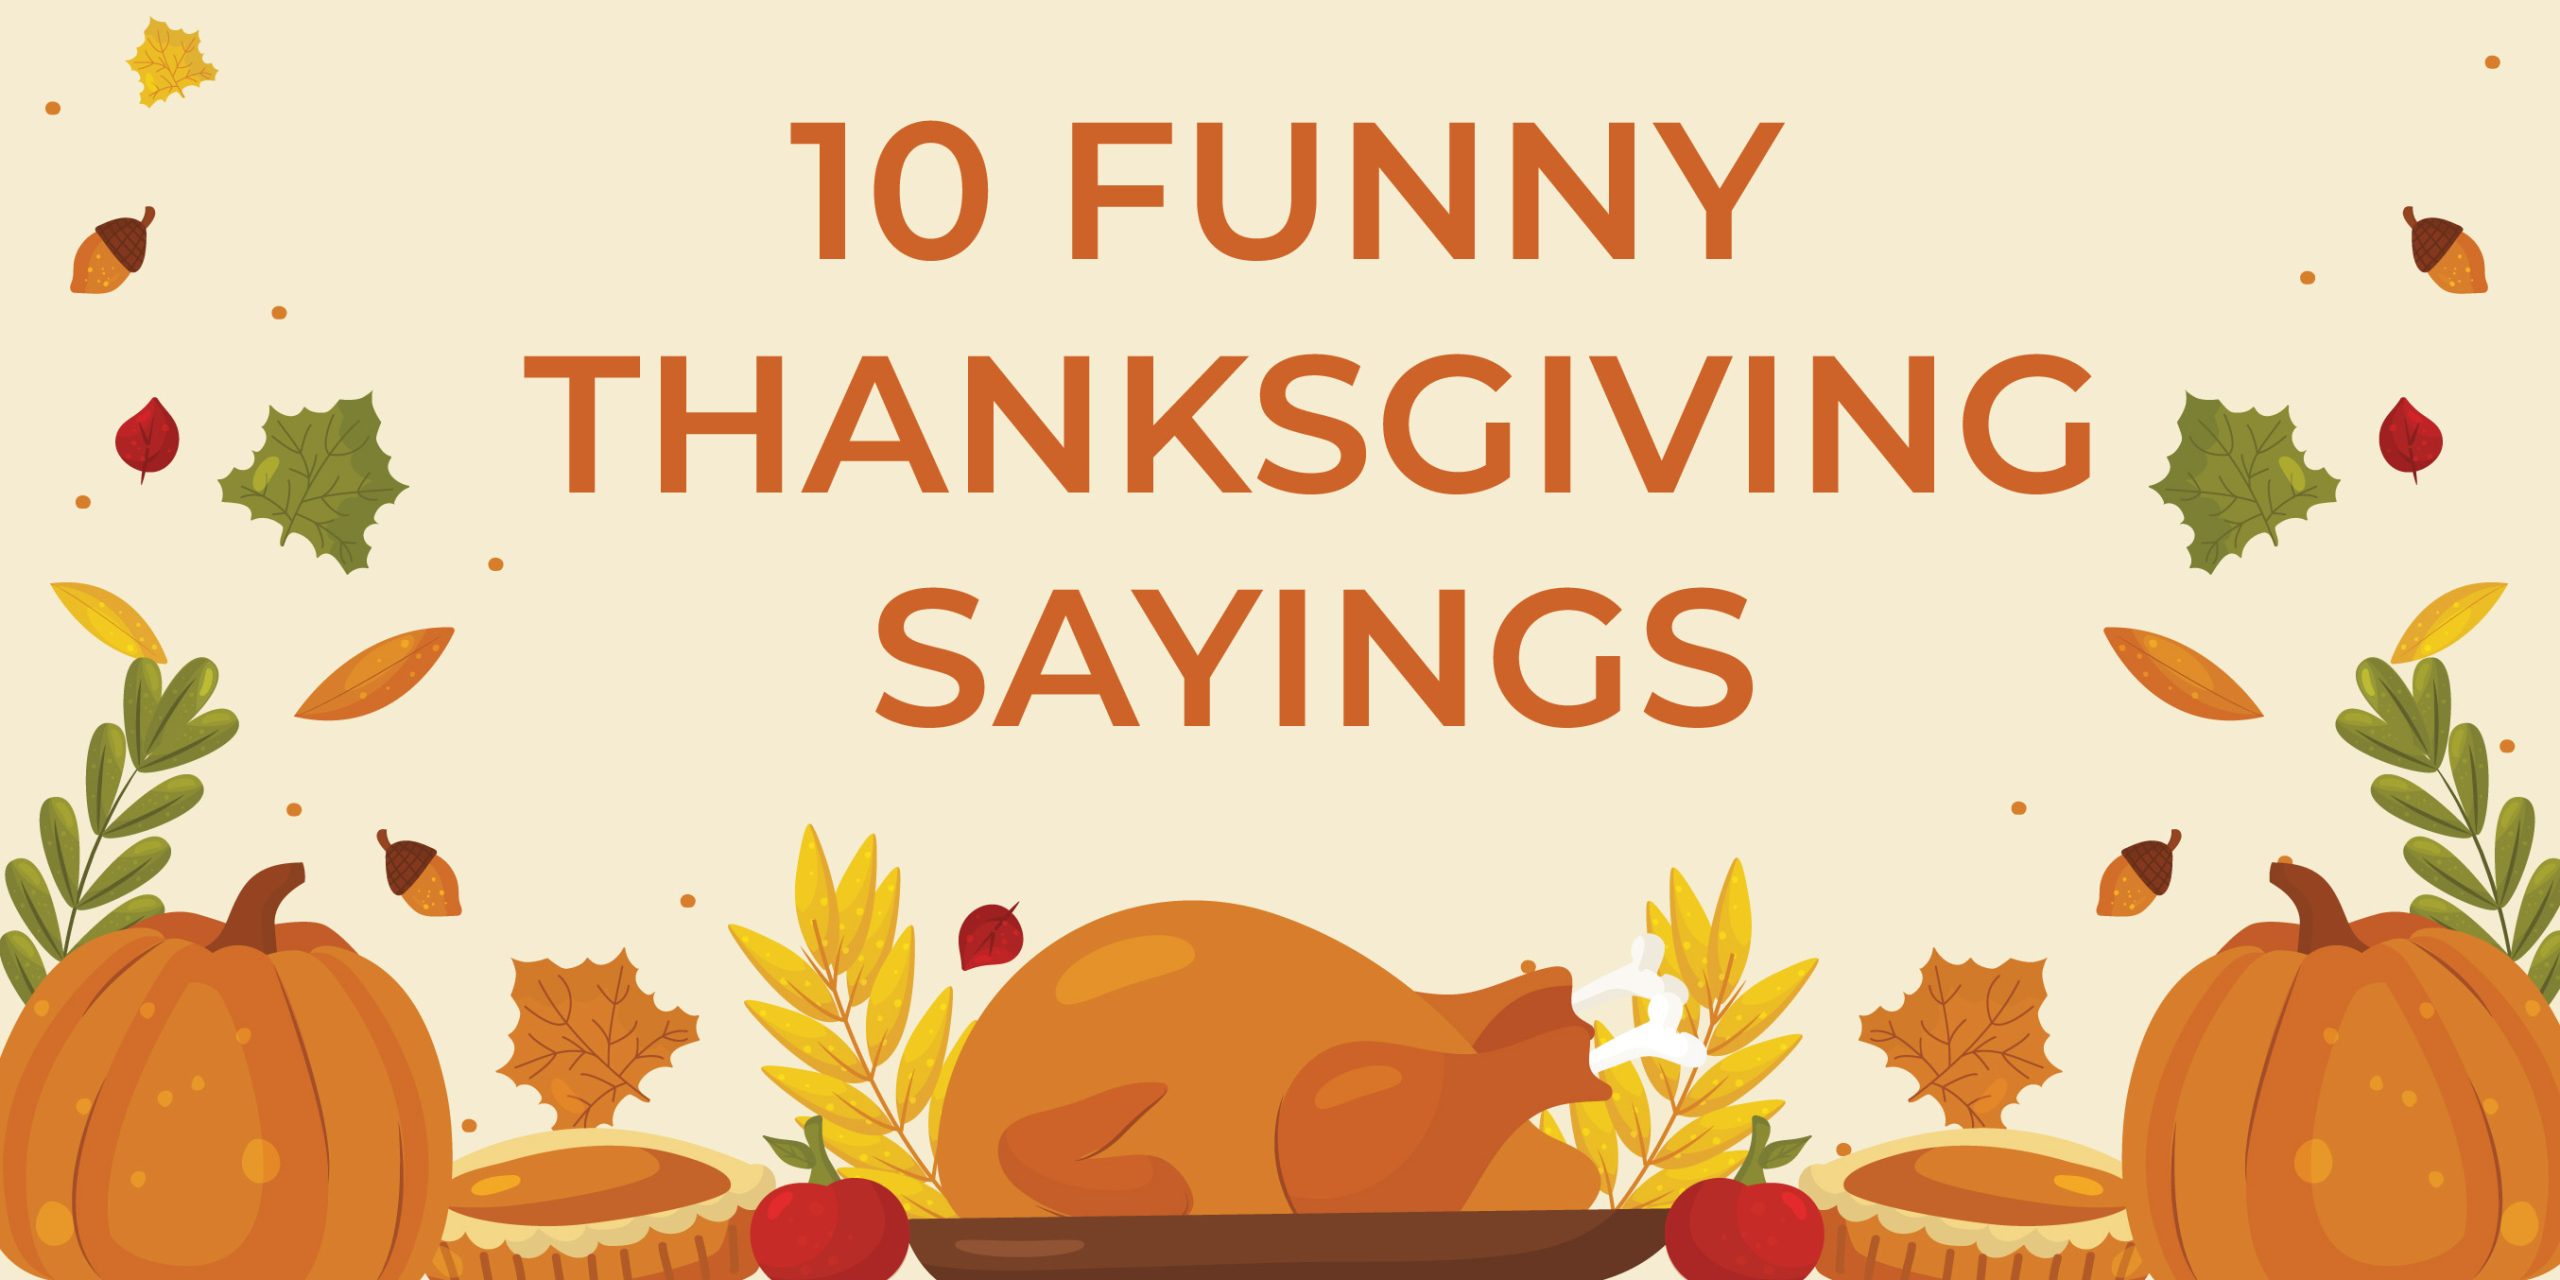 Funny Thanksgiving Sayings - 10